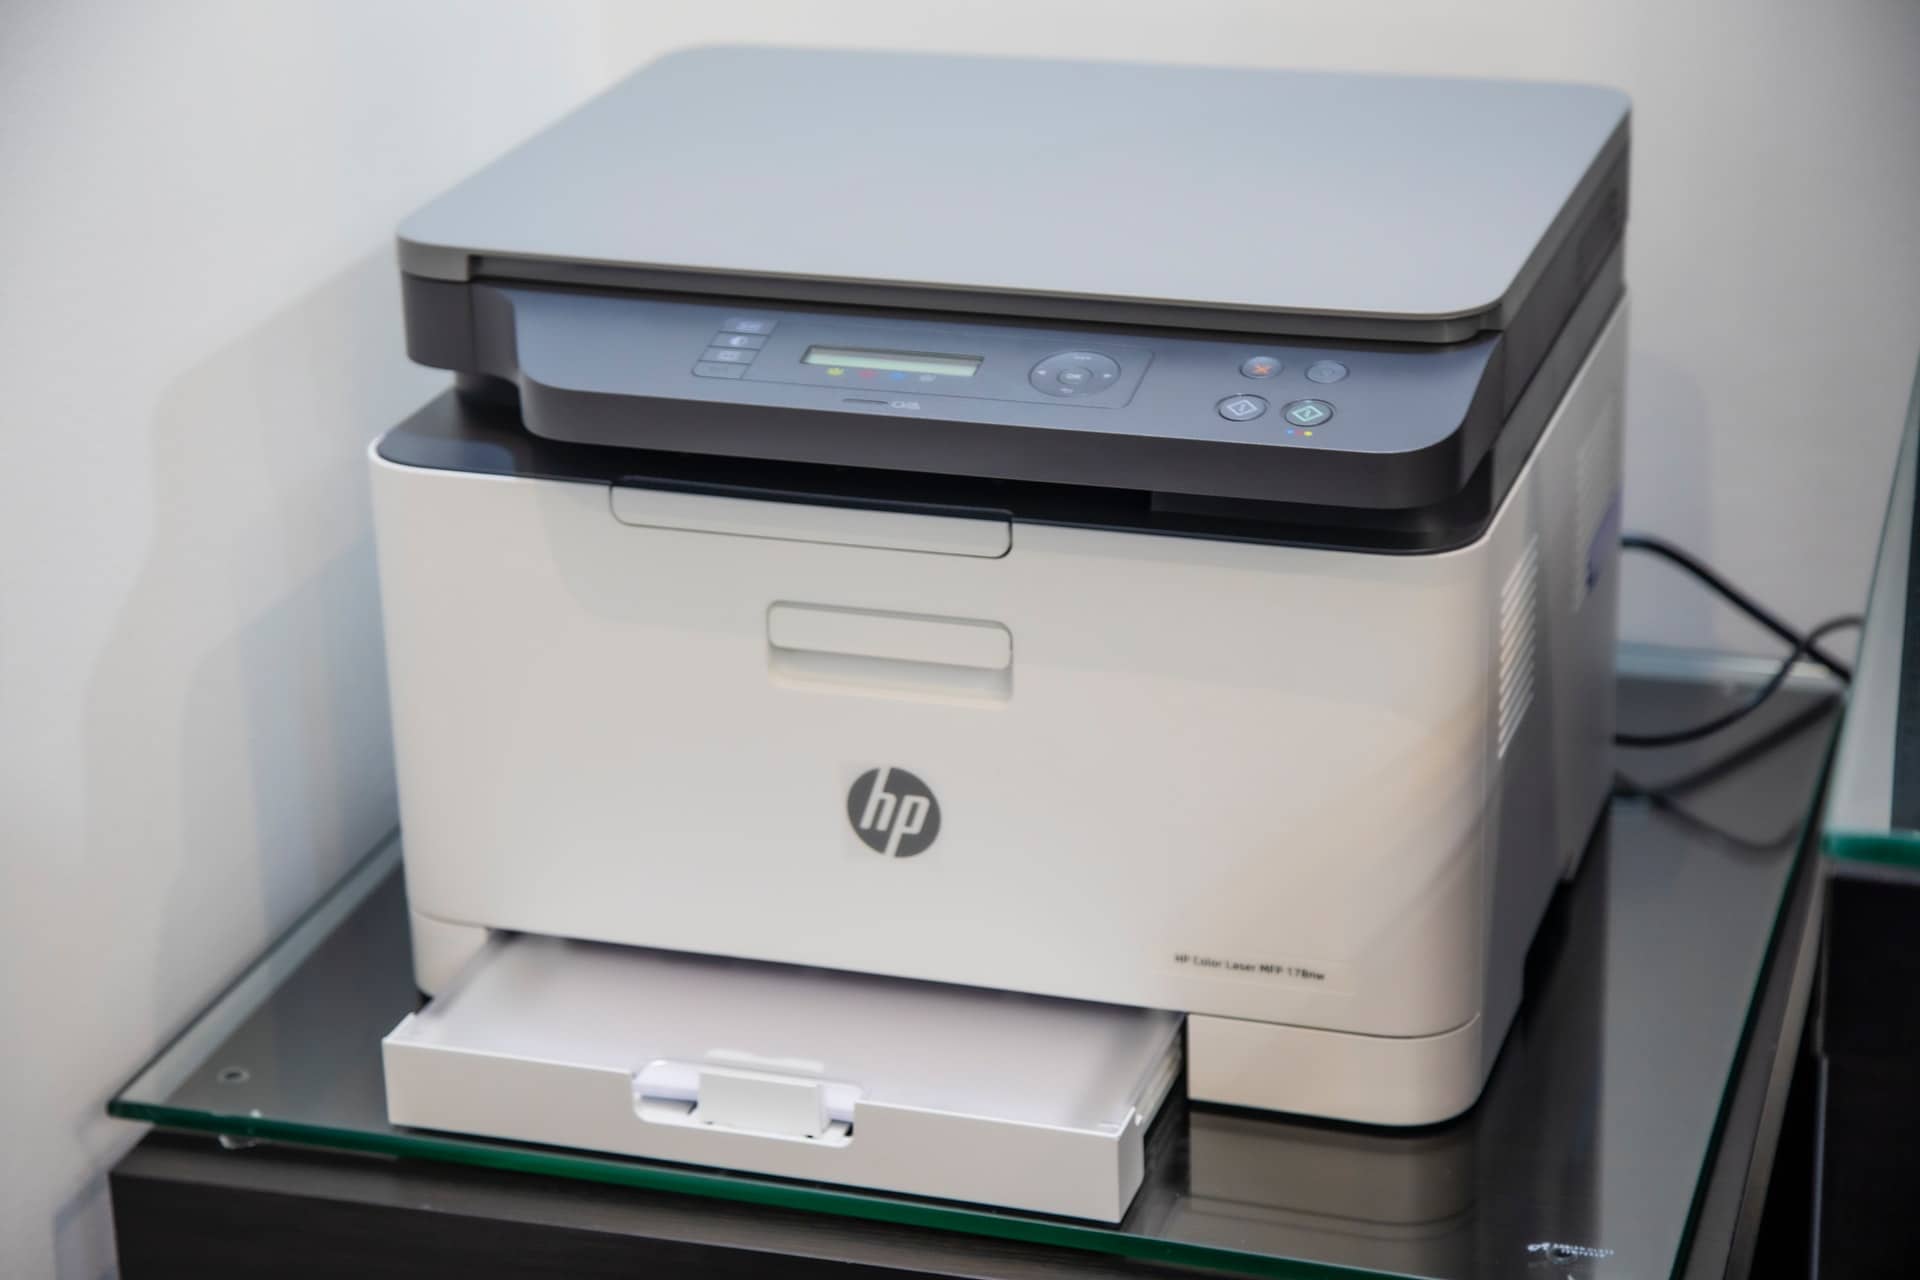 An HP brand photocopier machine